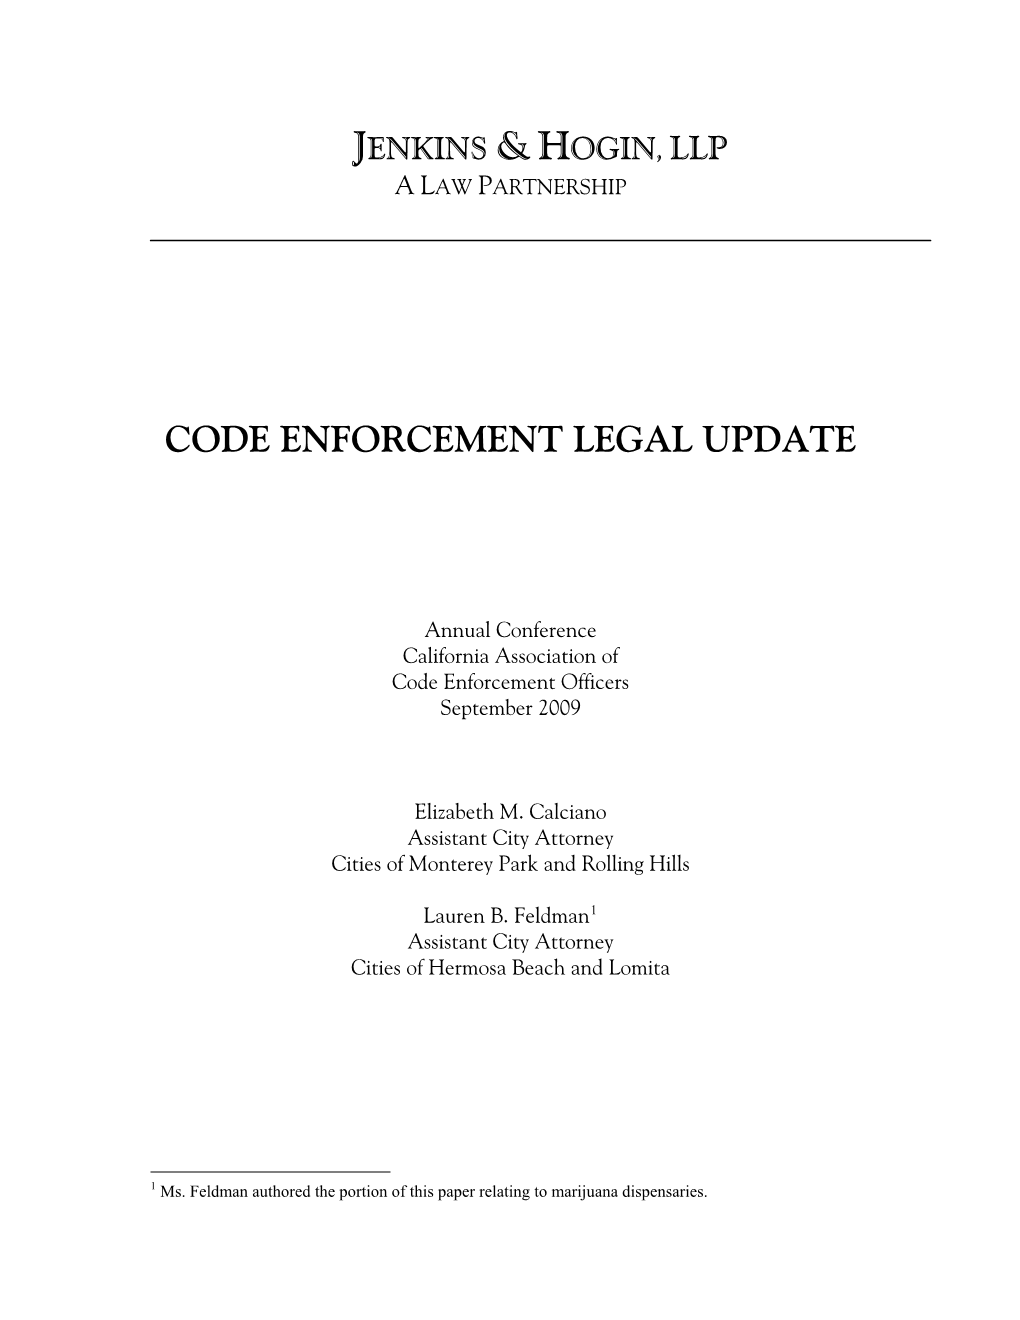 Code Enforcement Legal Update